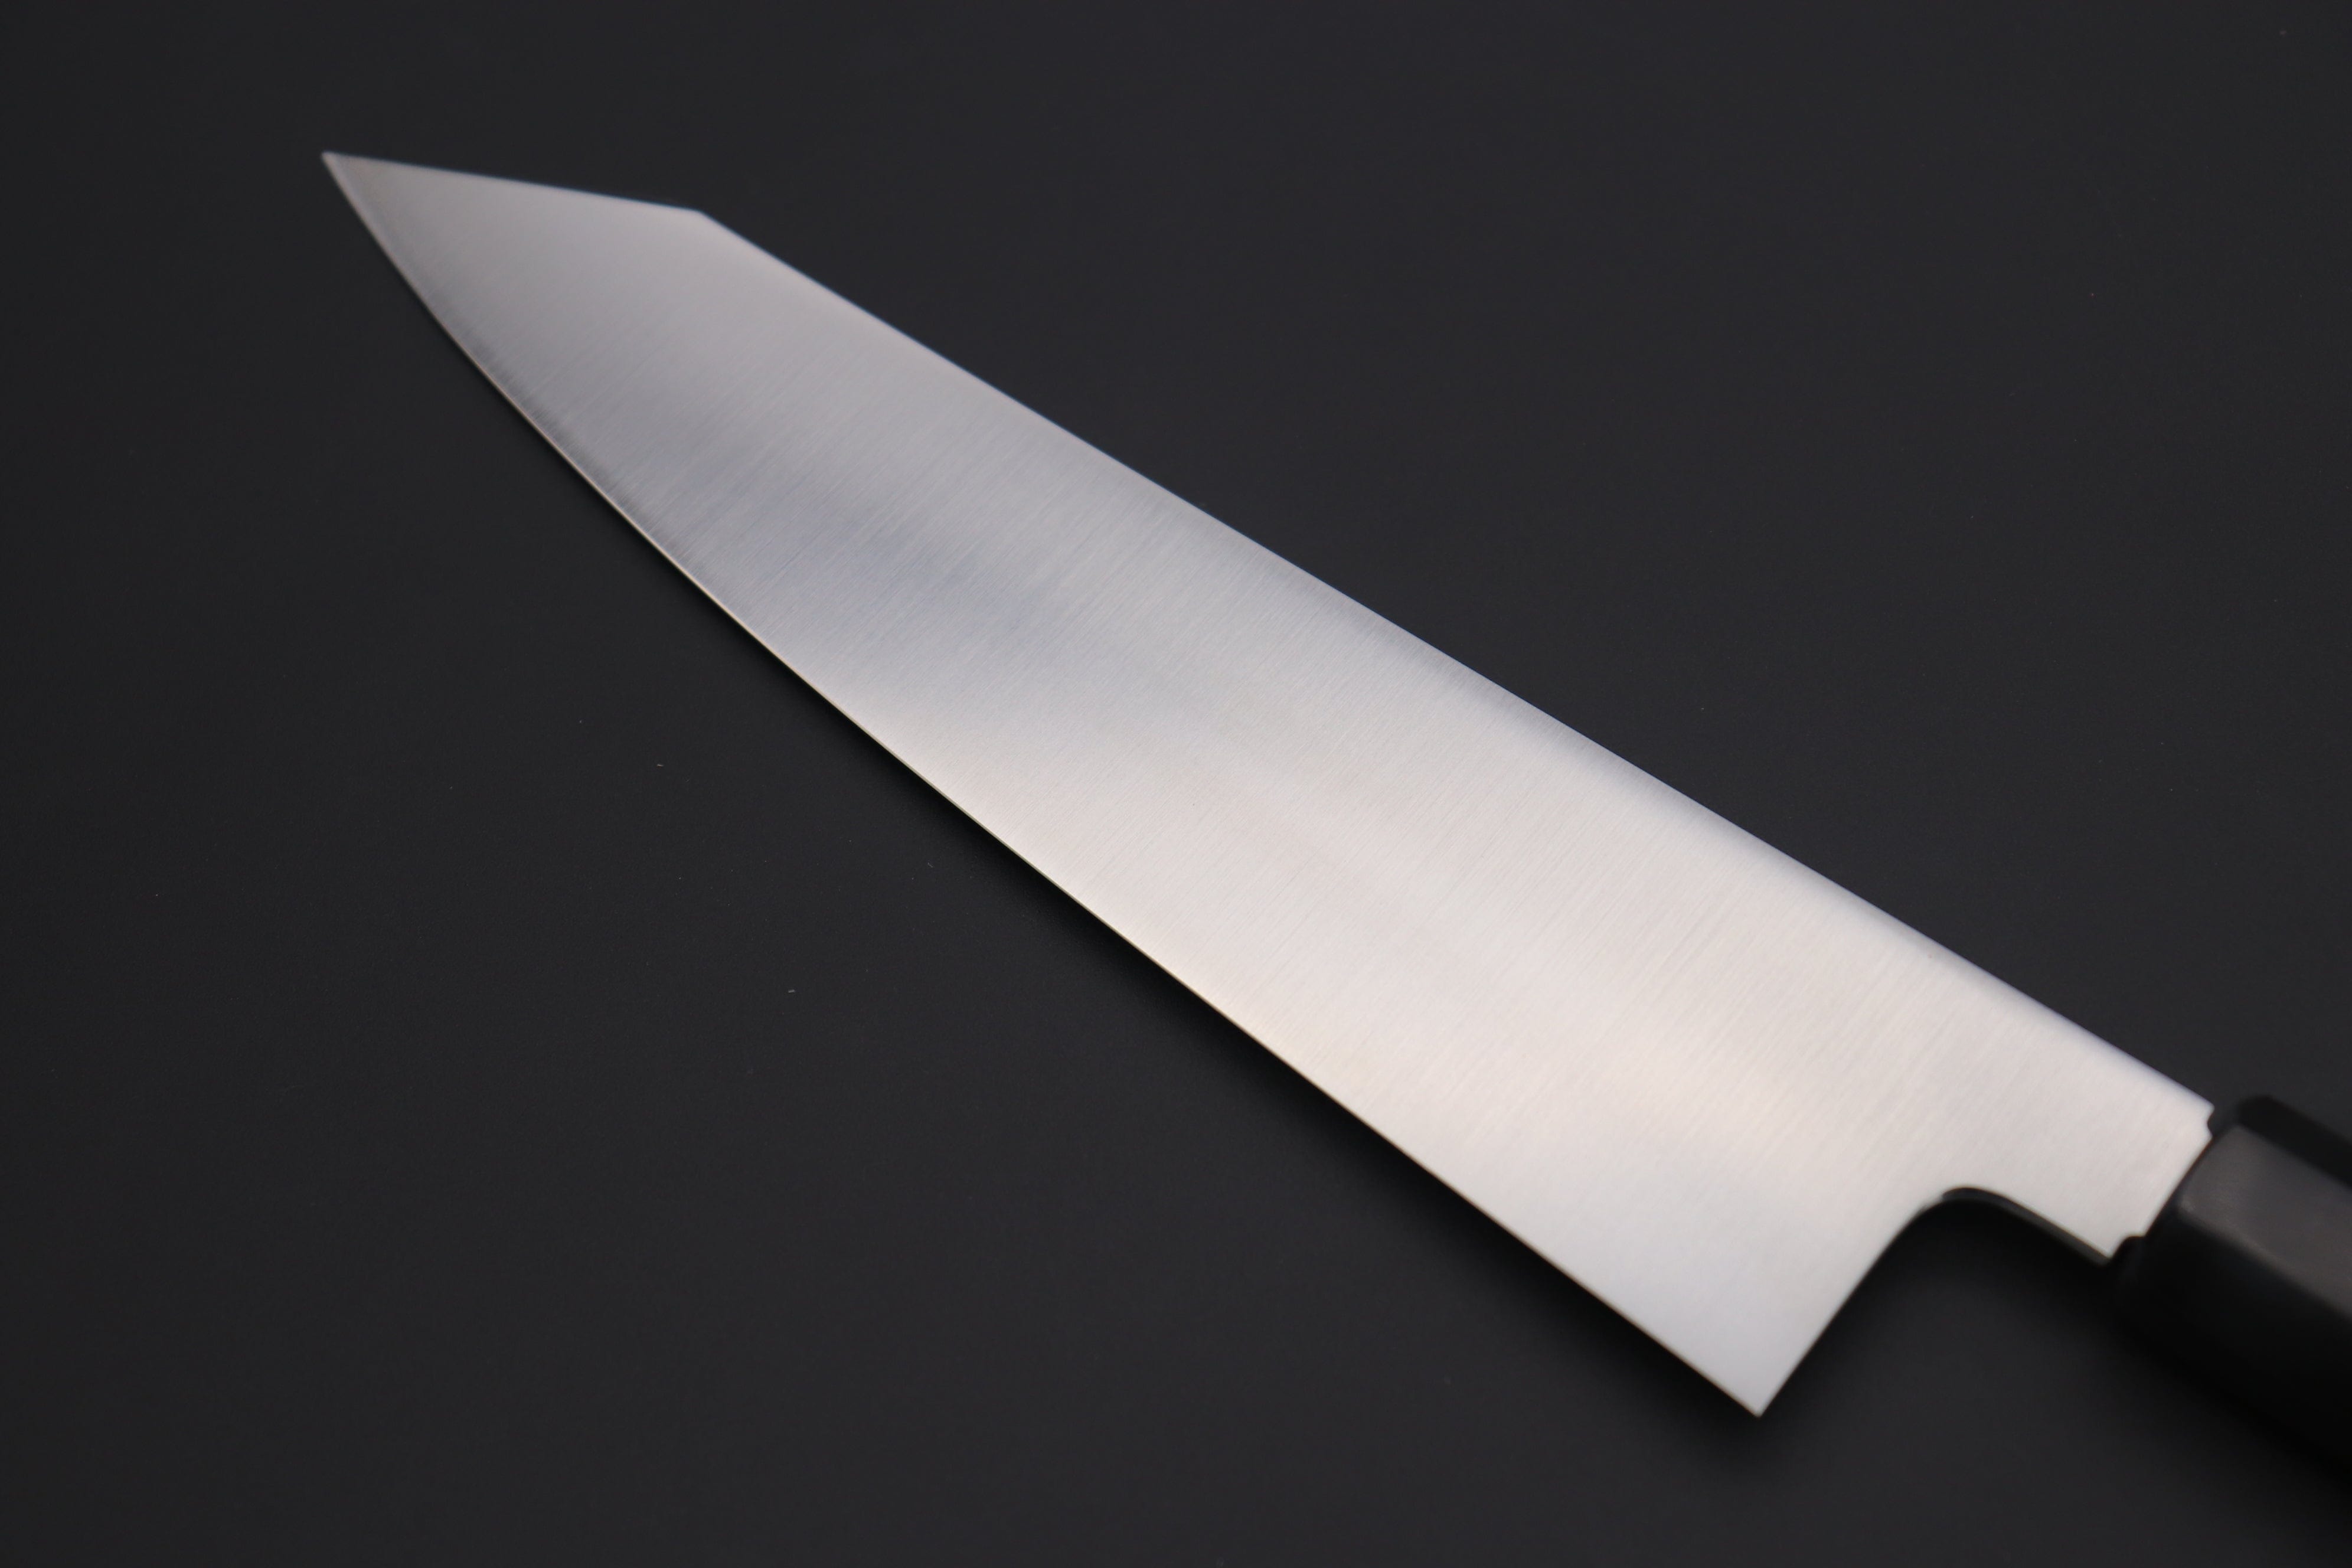 Spyderco Wakiita Gyuto K19GP Black G10 PlainEdge Kitchen Knife – Sports and  Gadgets